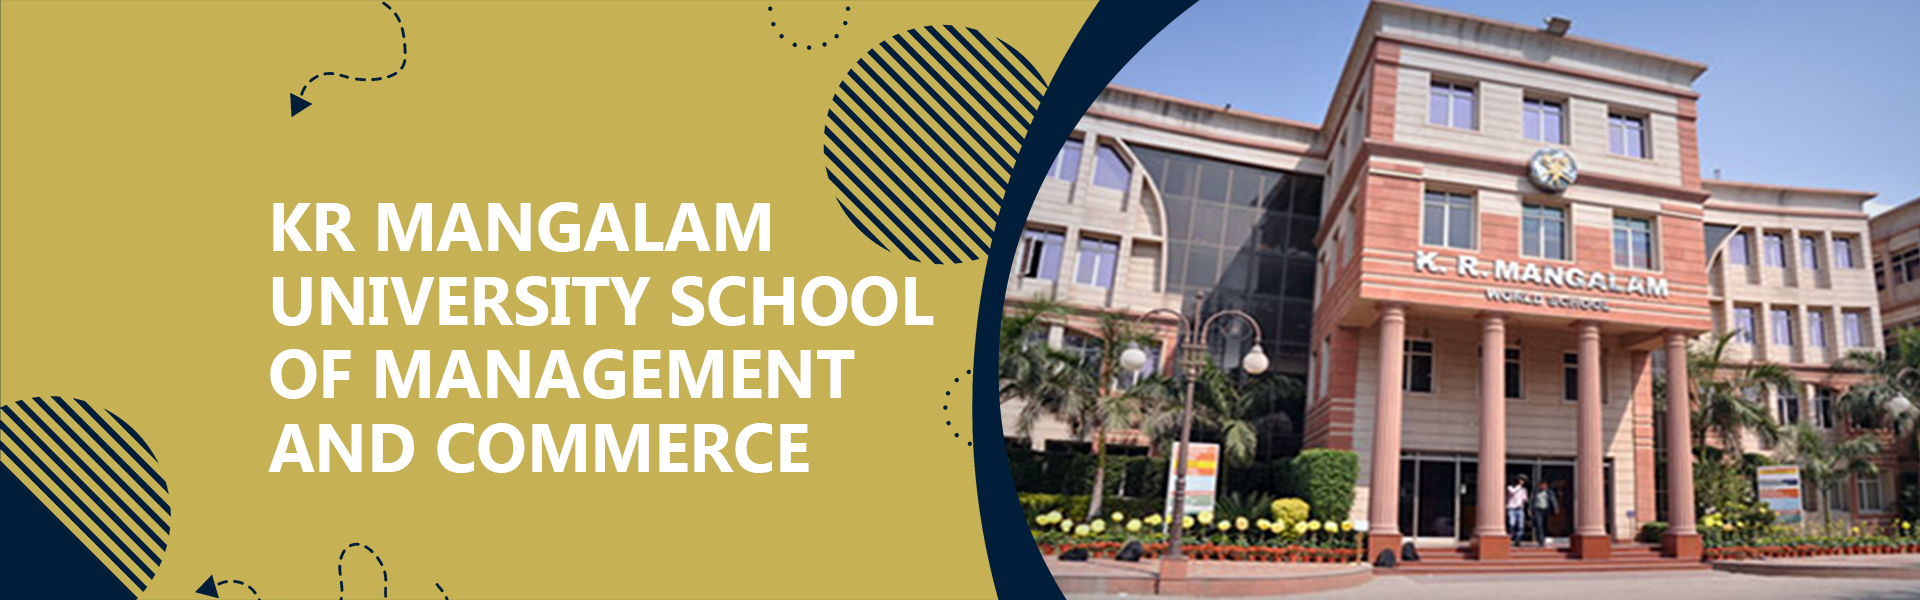 KR Mangalam University, School Of Management And Commerce